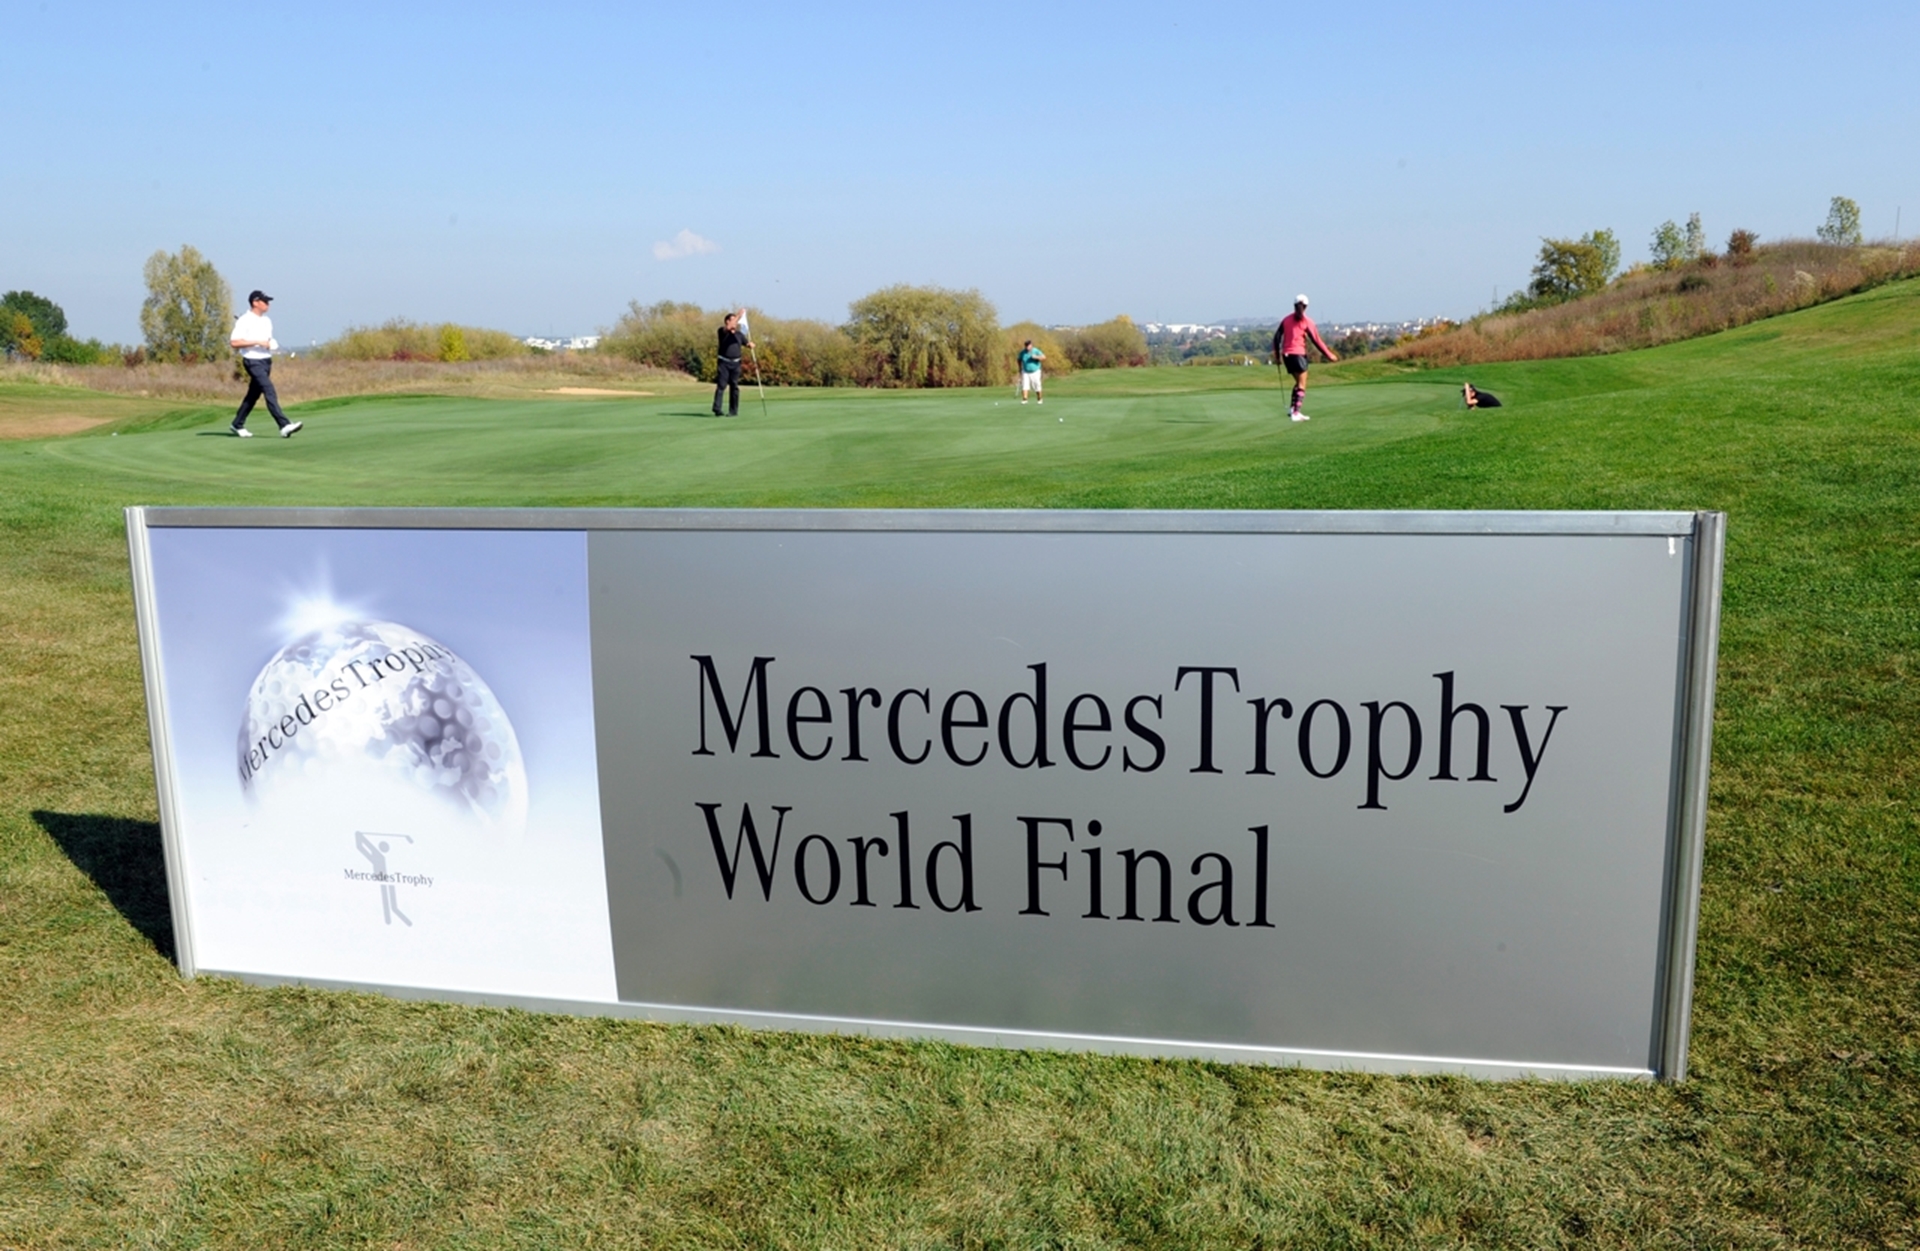 Amateur golfers from around the world to tee off in Stuttgart: MercedesTrophy World Final 2012